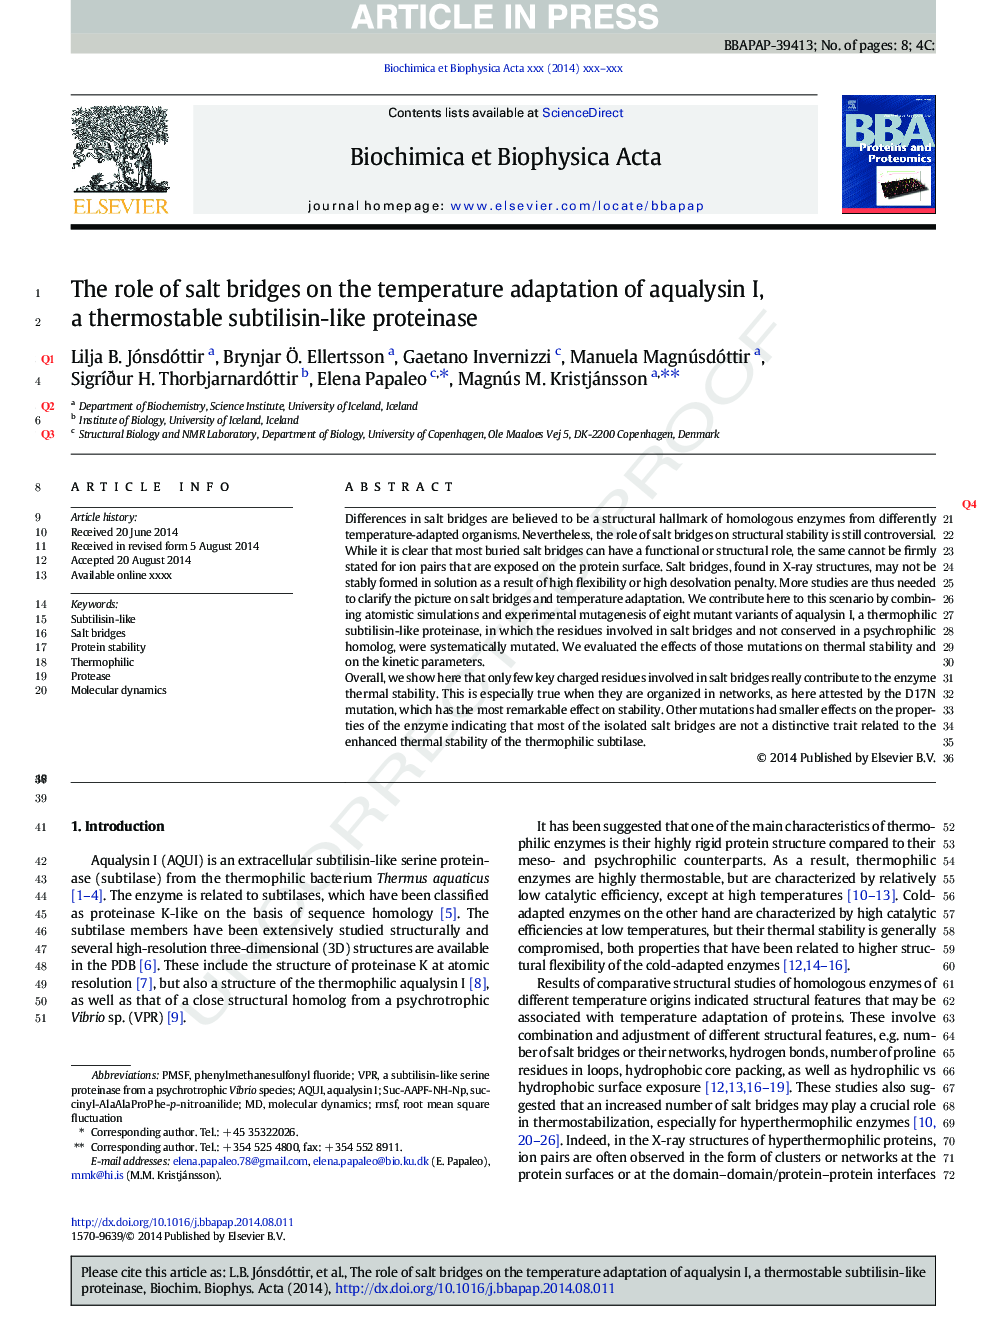 The role of salt bridges on the temperature adaptation of aqualysin I, a thermostable subtilisin-like proteinase